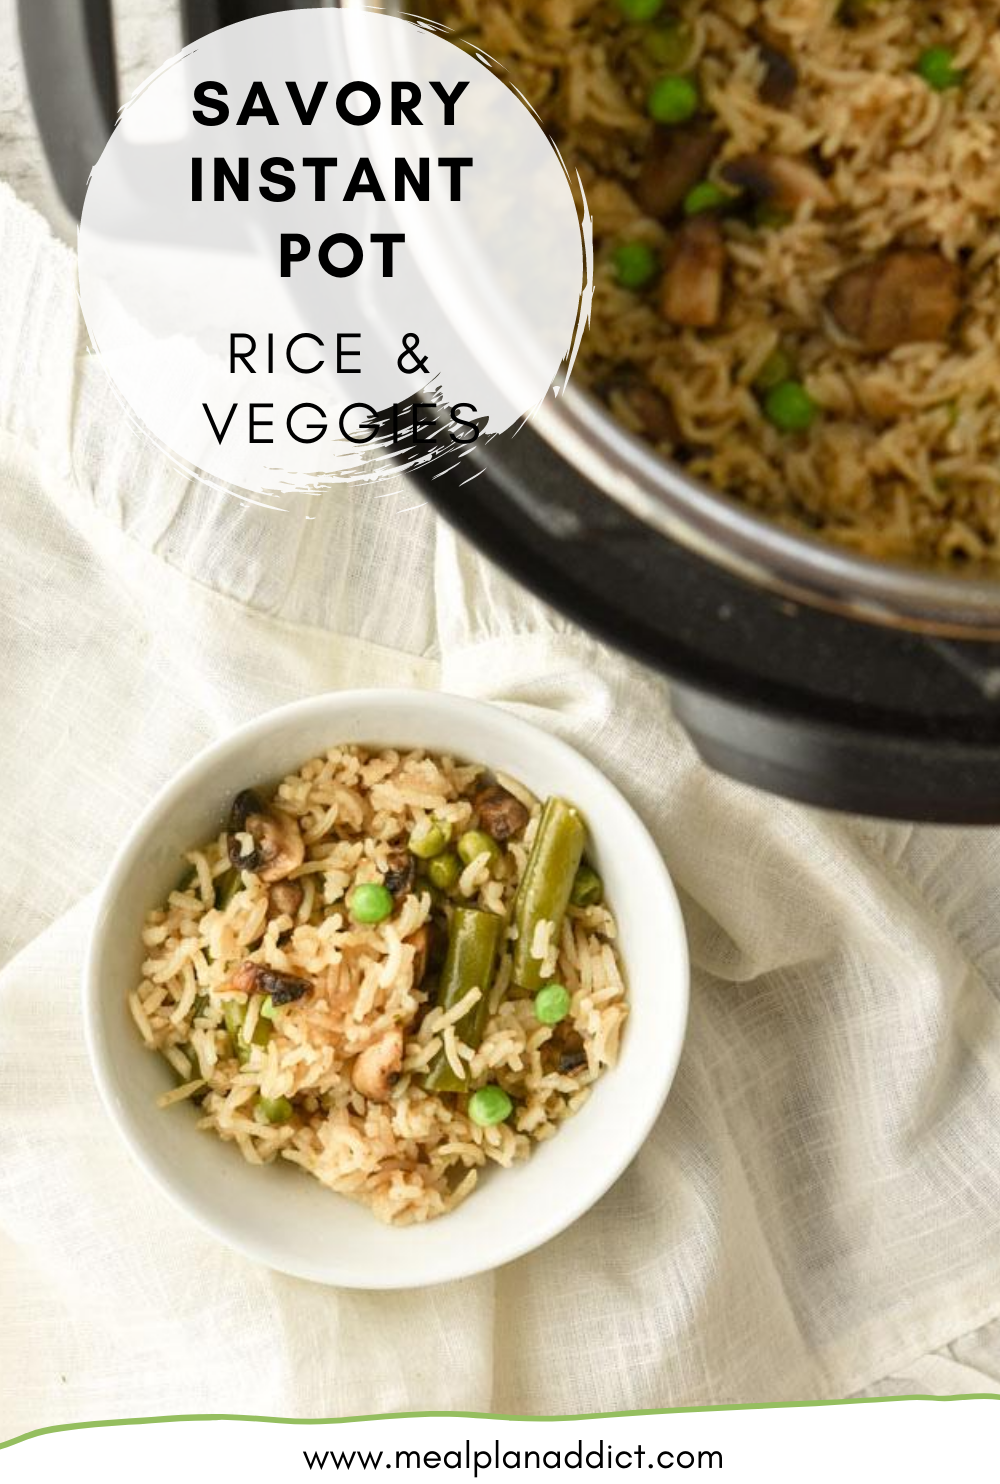 Savory Instant Pot Rice & Veggies